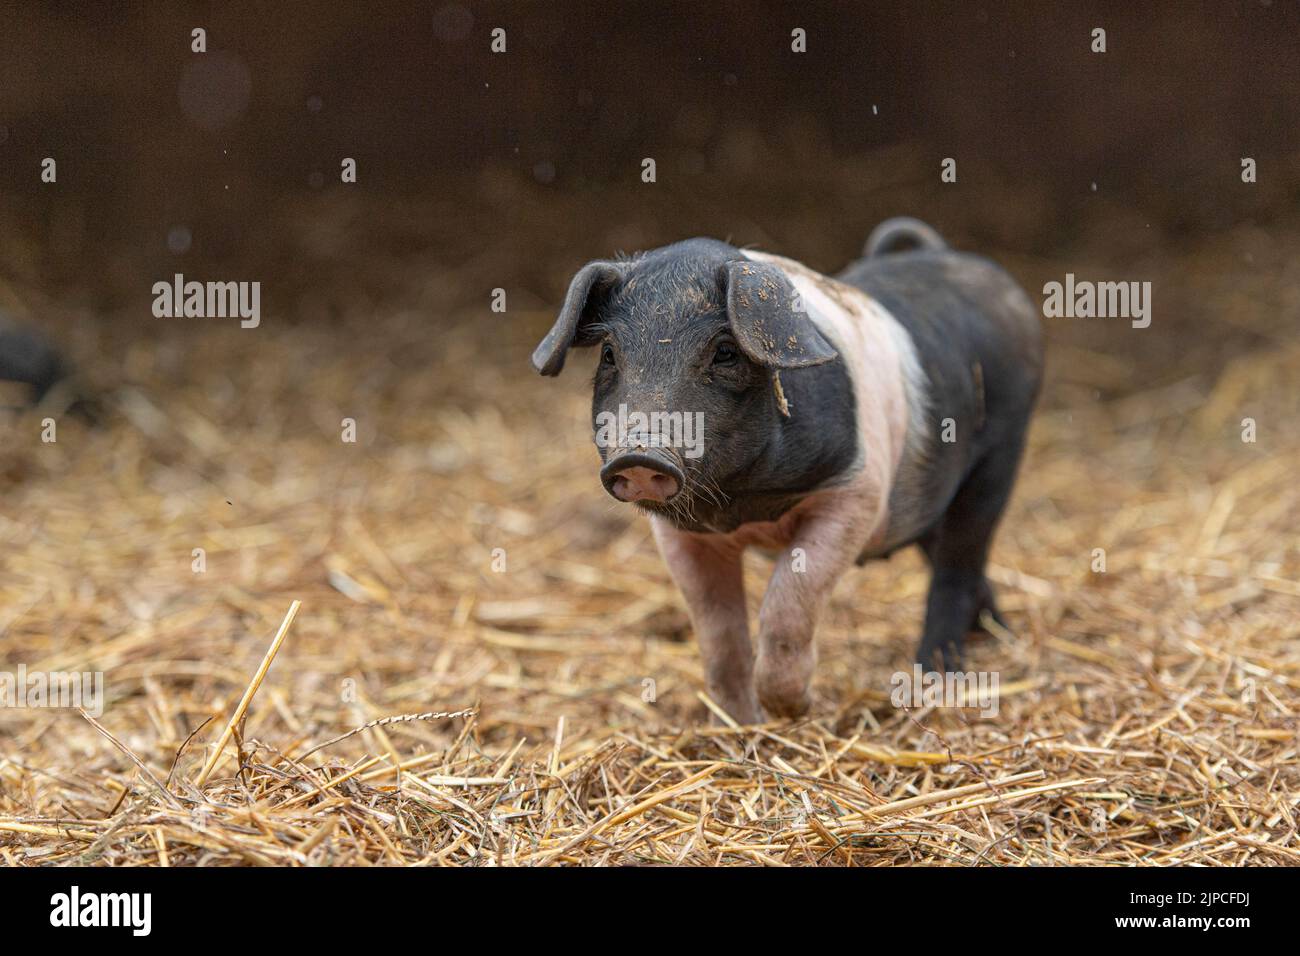 Saddleback piglet Stock Photo